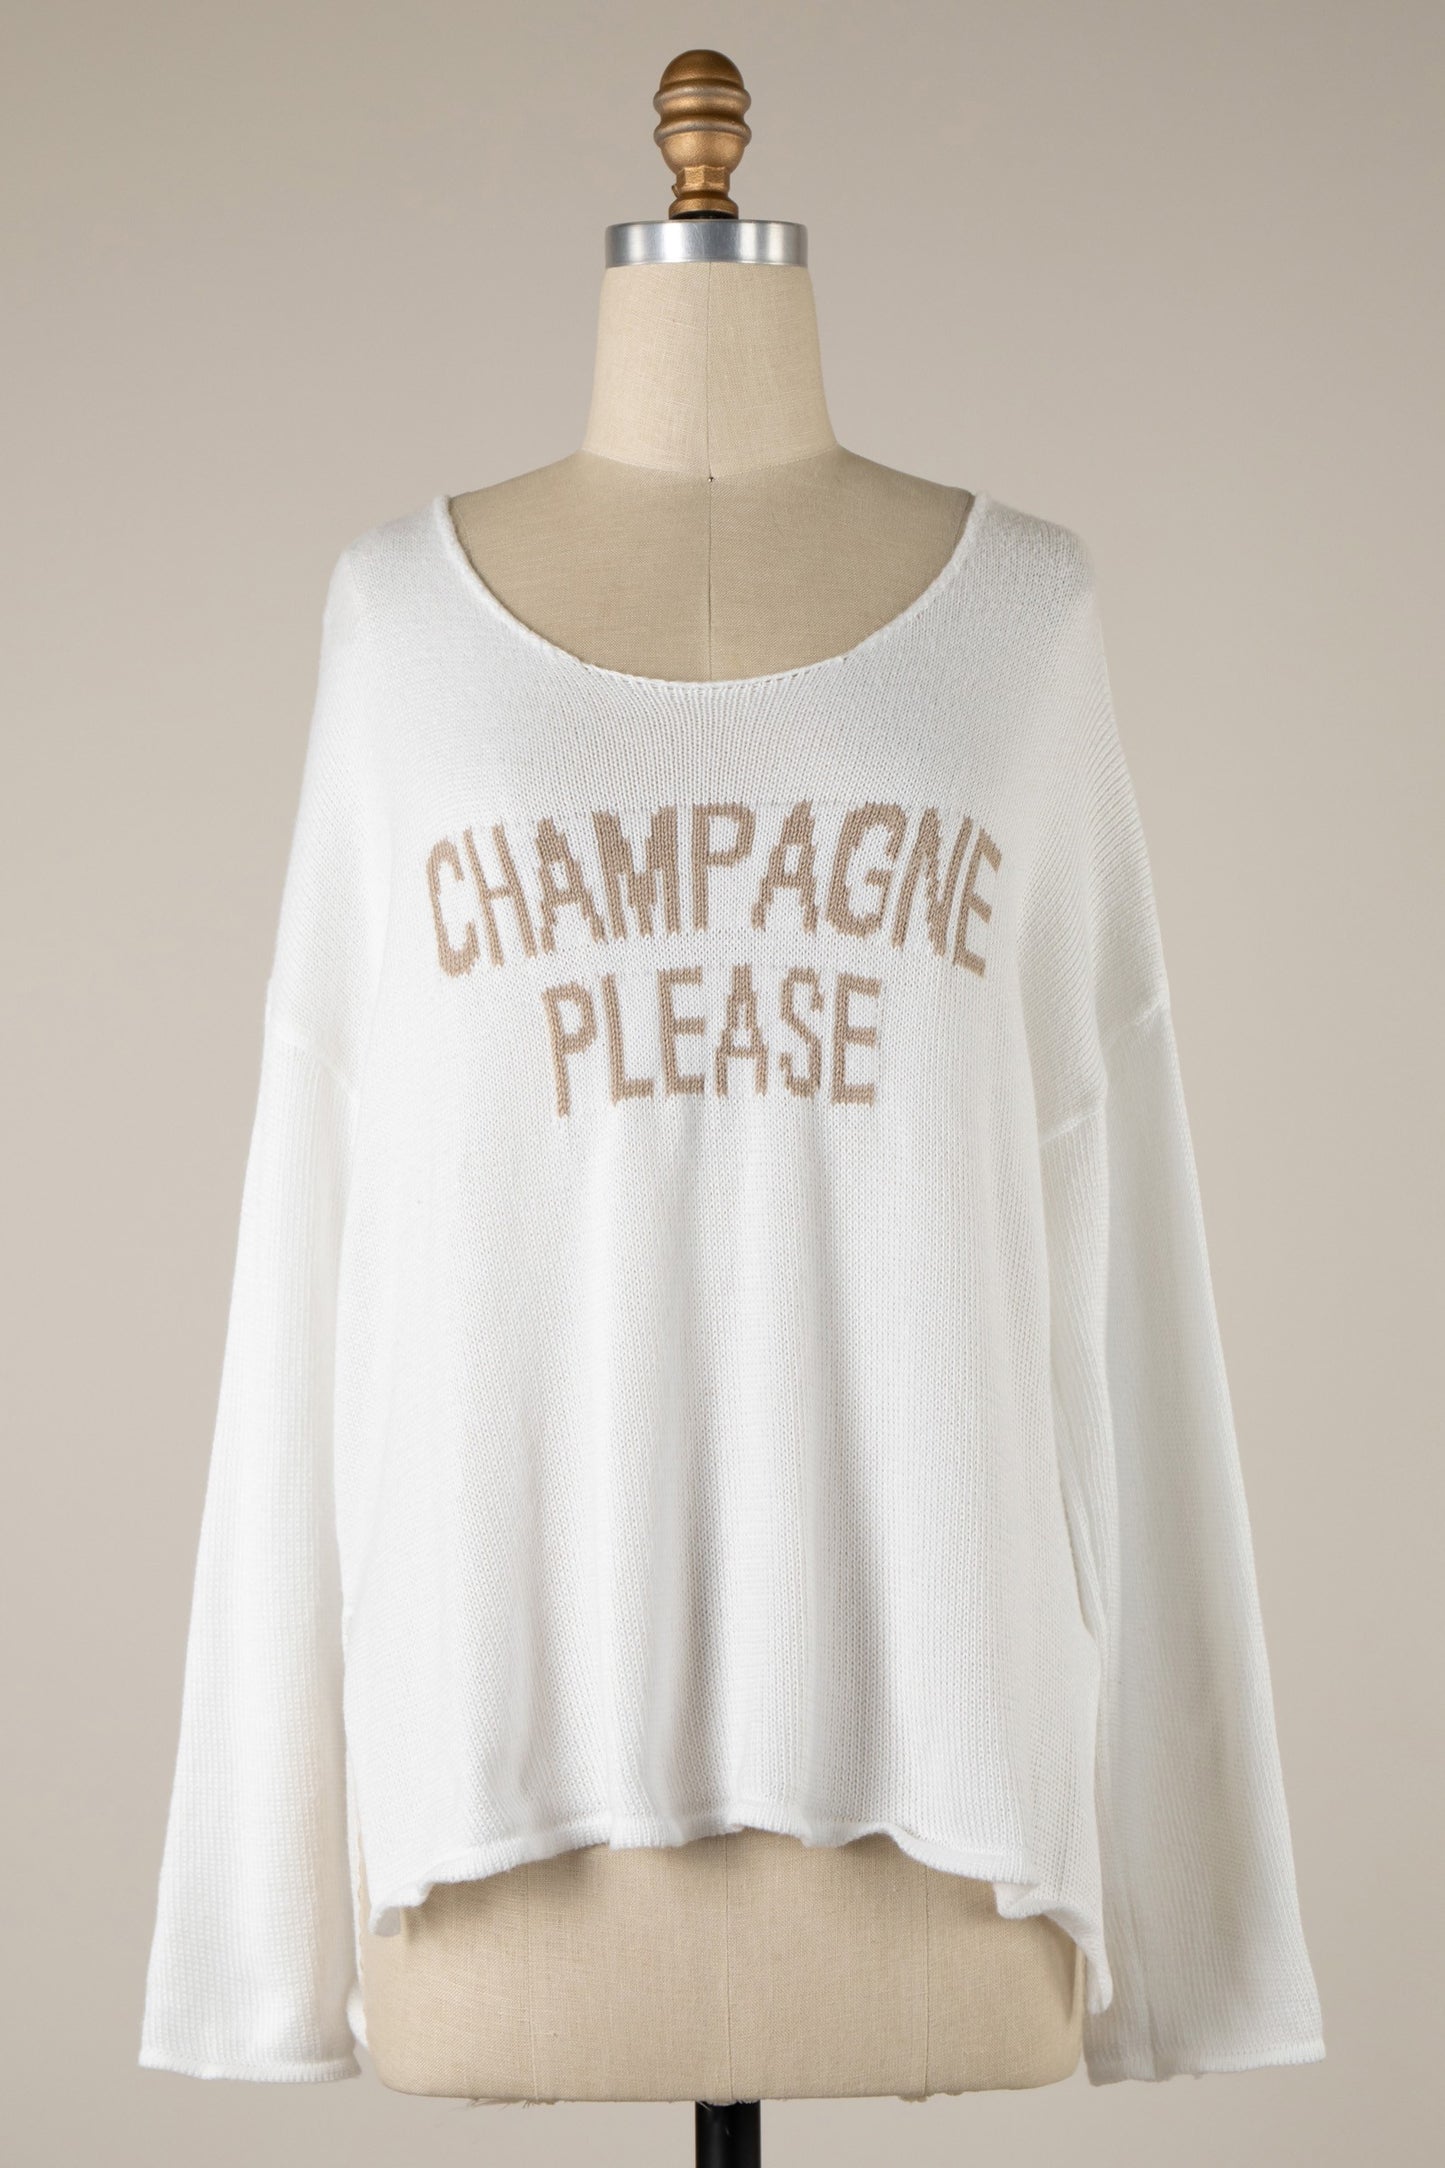 Champagne Please!